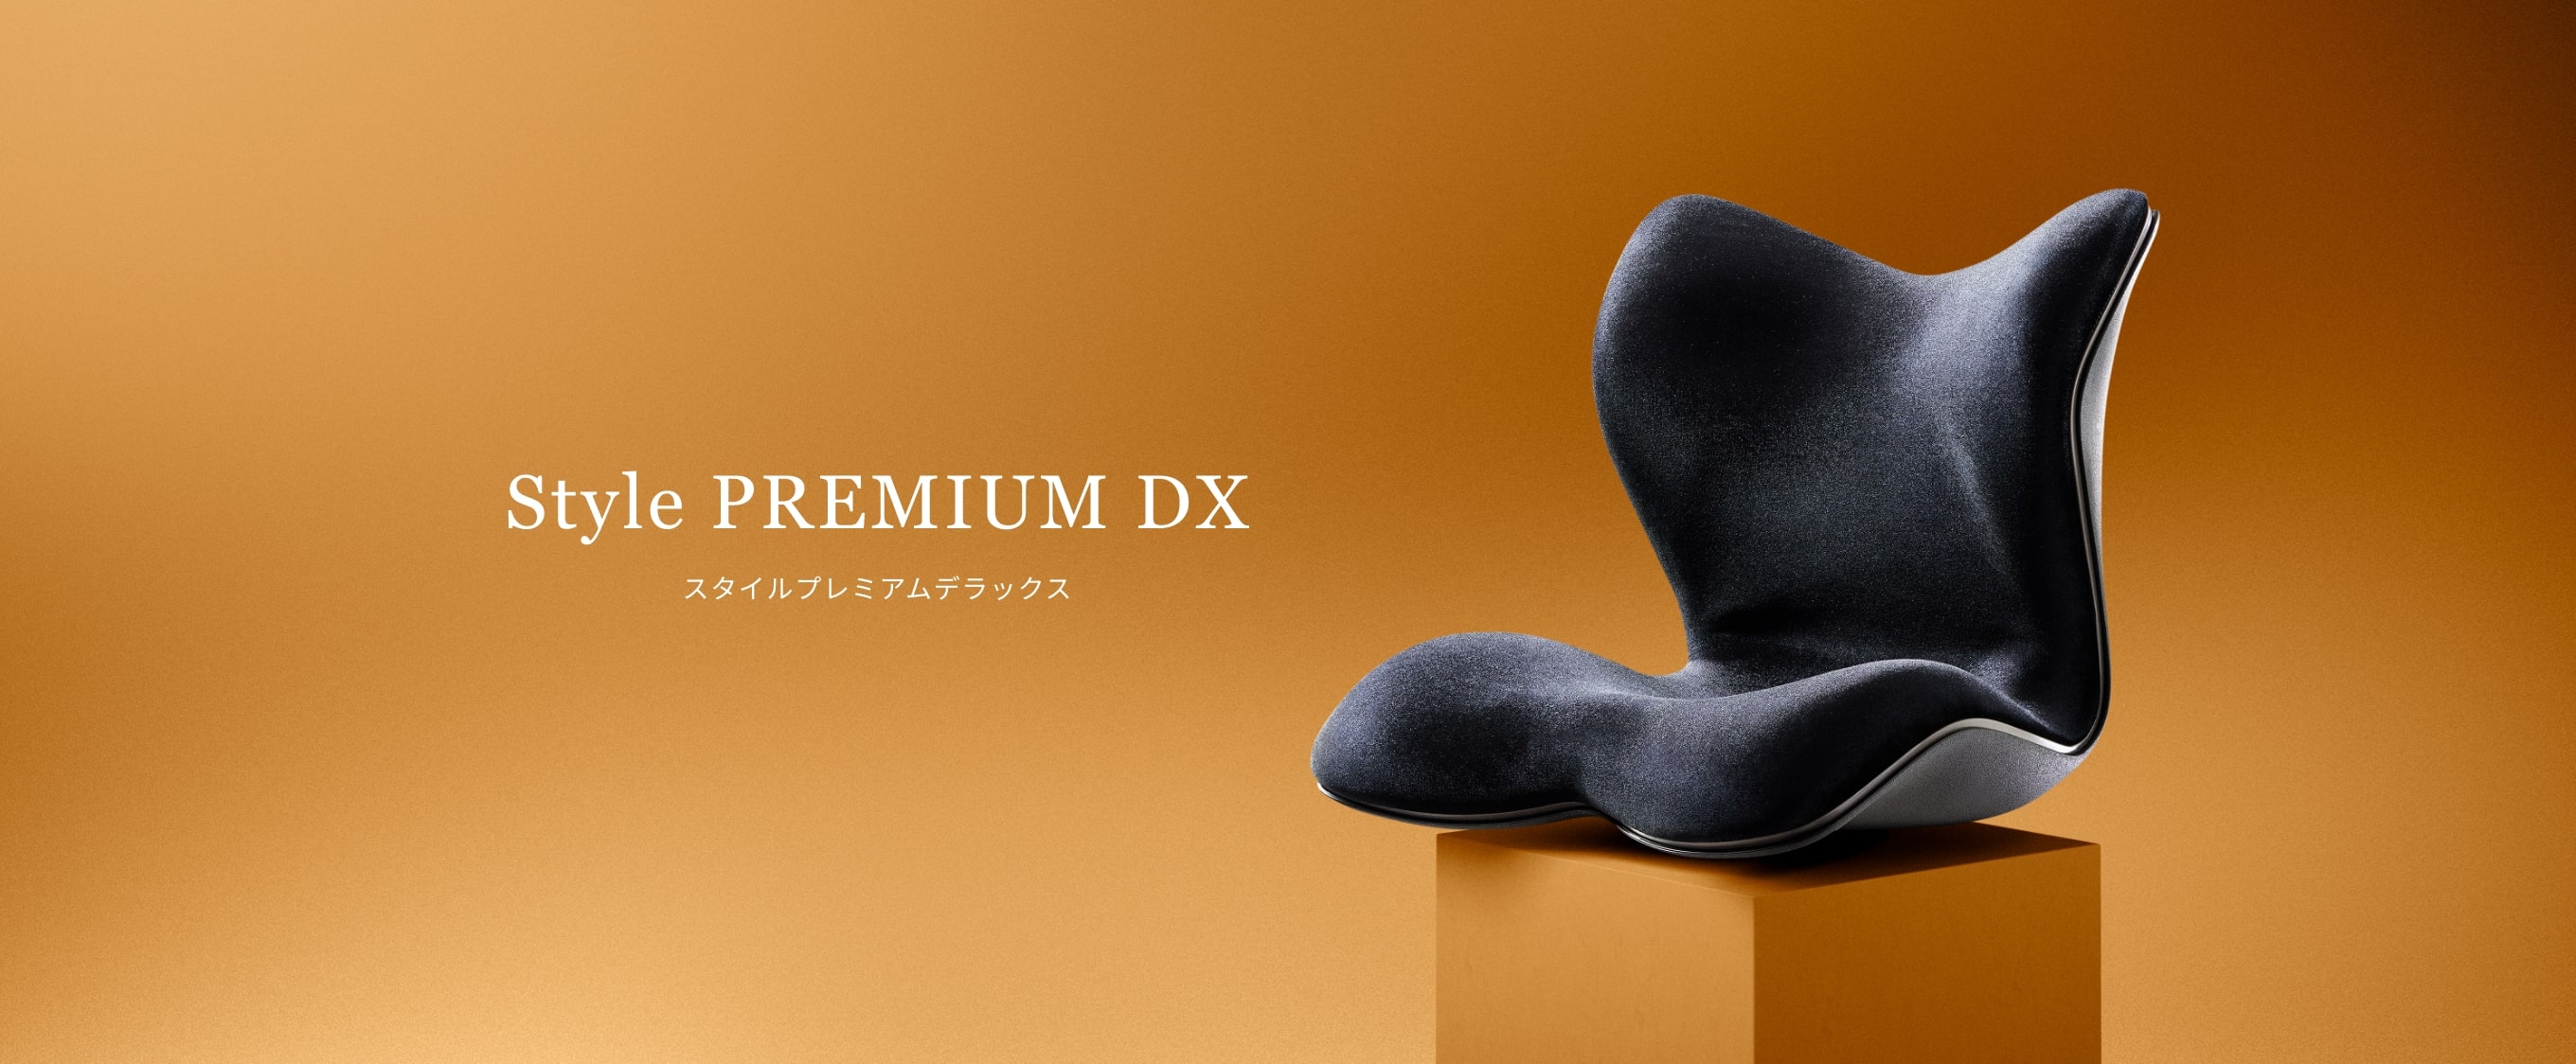 Style PREMIUM DX / スタイル プレミアム デラックスシリコーンゴム